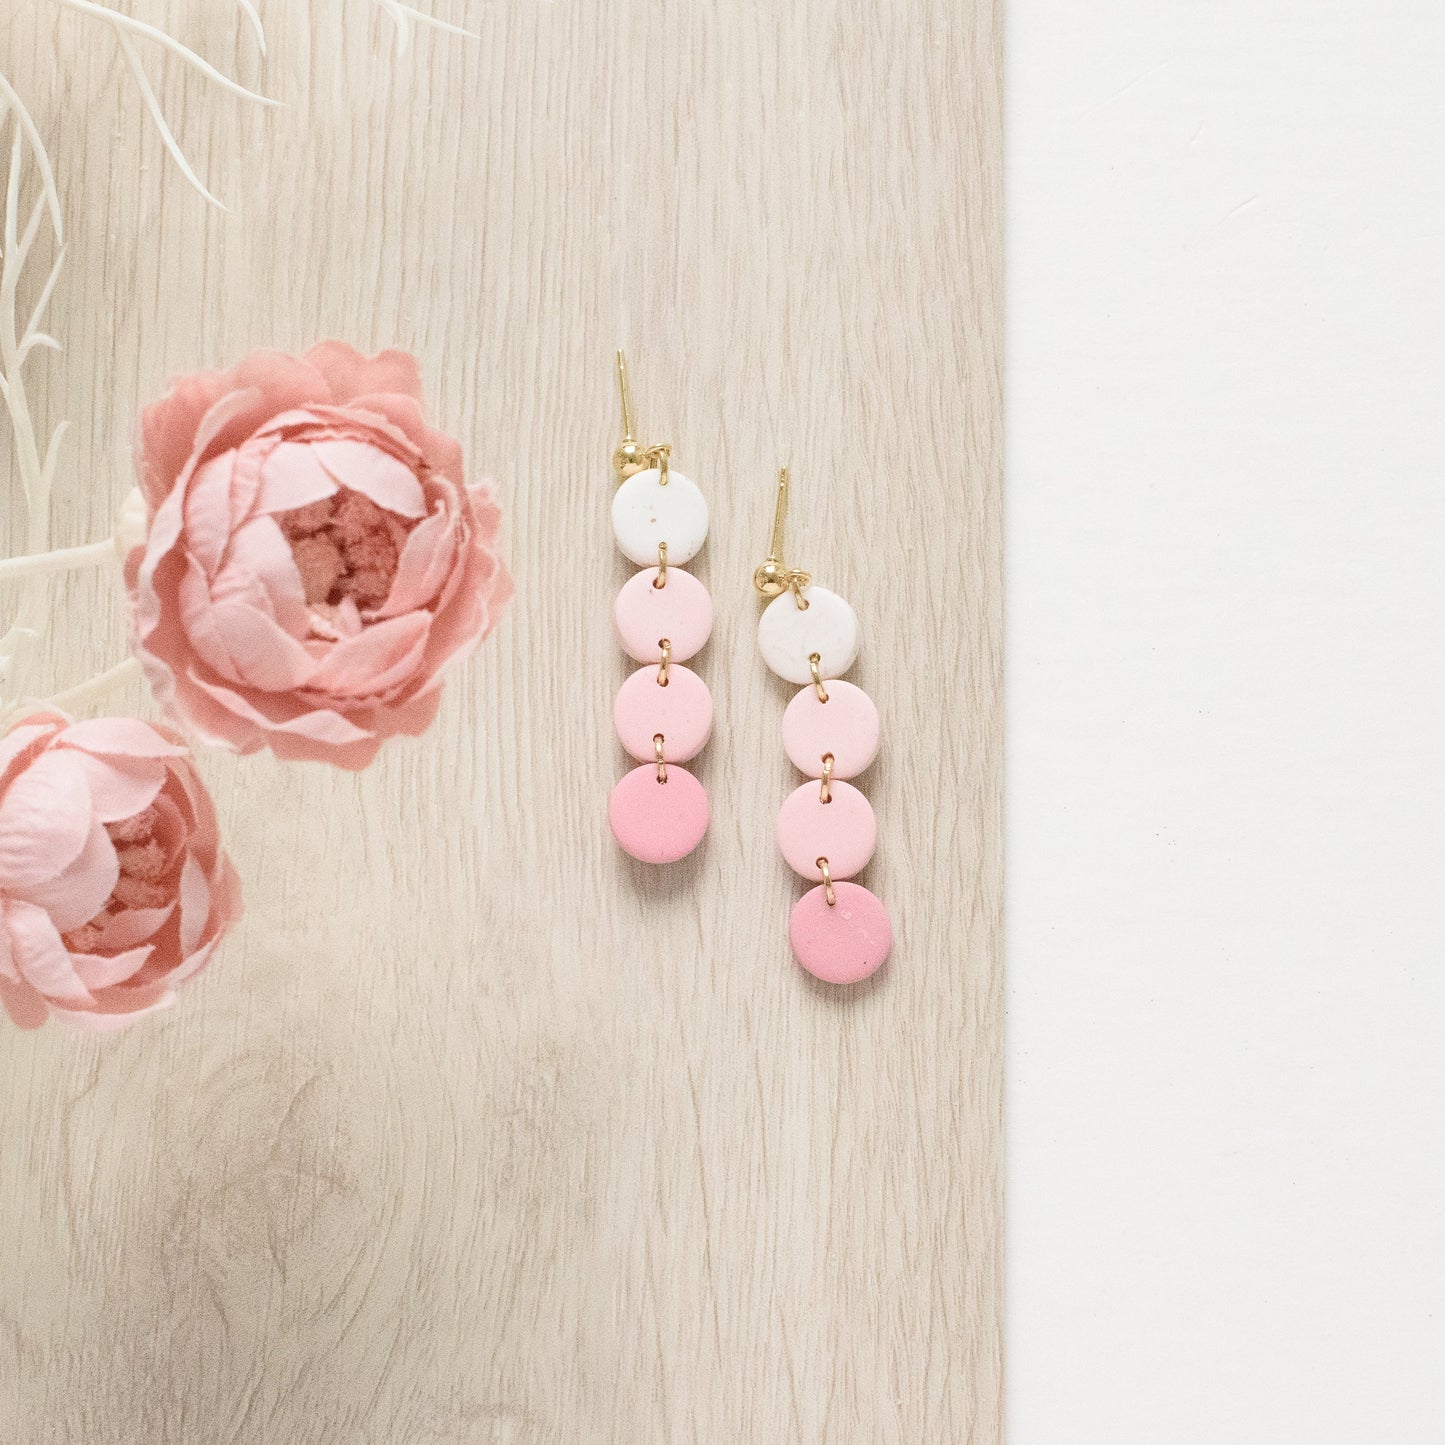 Mini Tiered Pink Ombre Gradient Earrings - Claymore NZ-Earrings